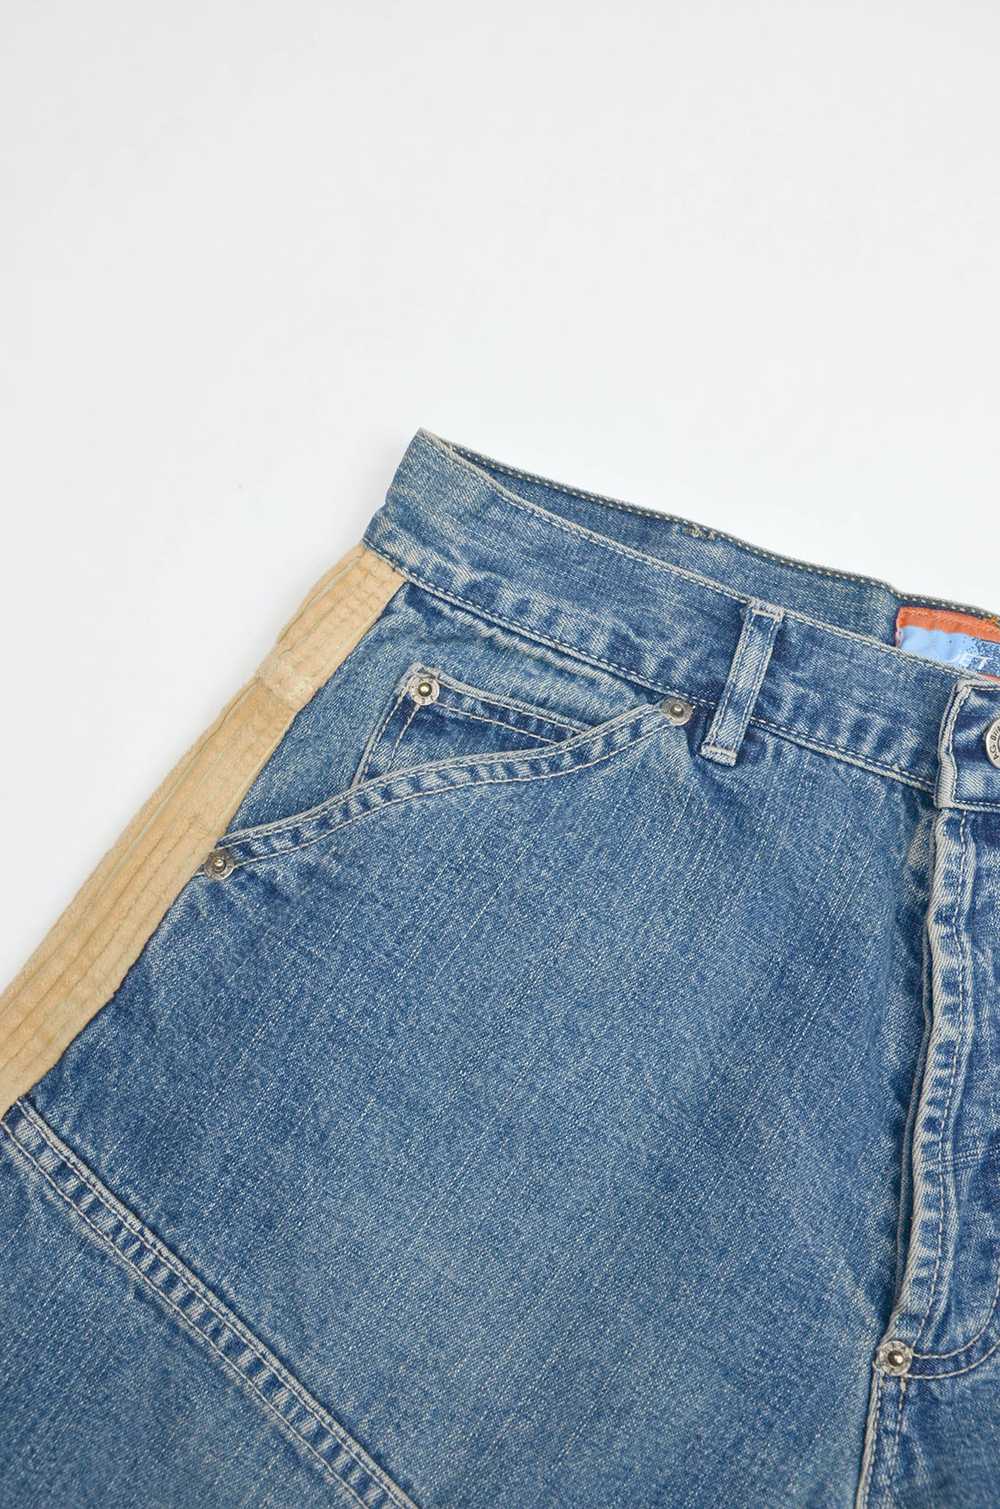 Jet Lag JET LAG Vintage Half Corduroy Jeans - image 4